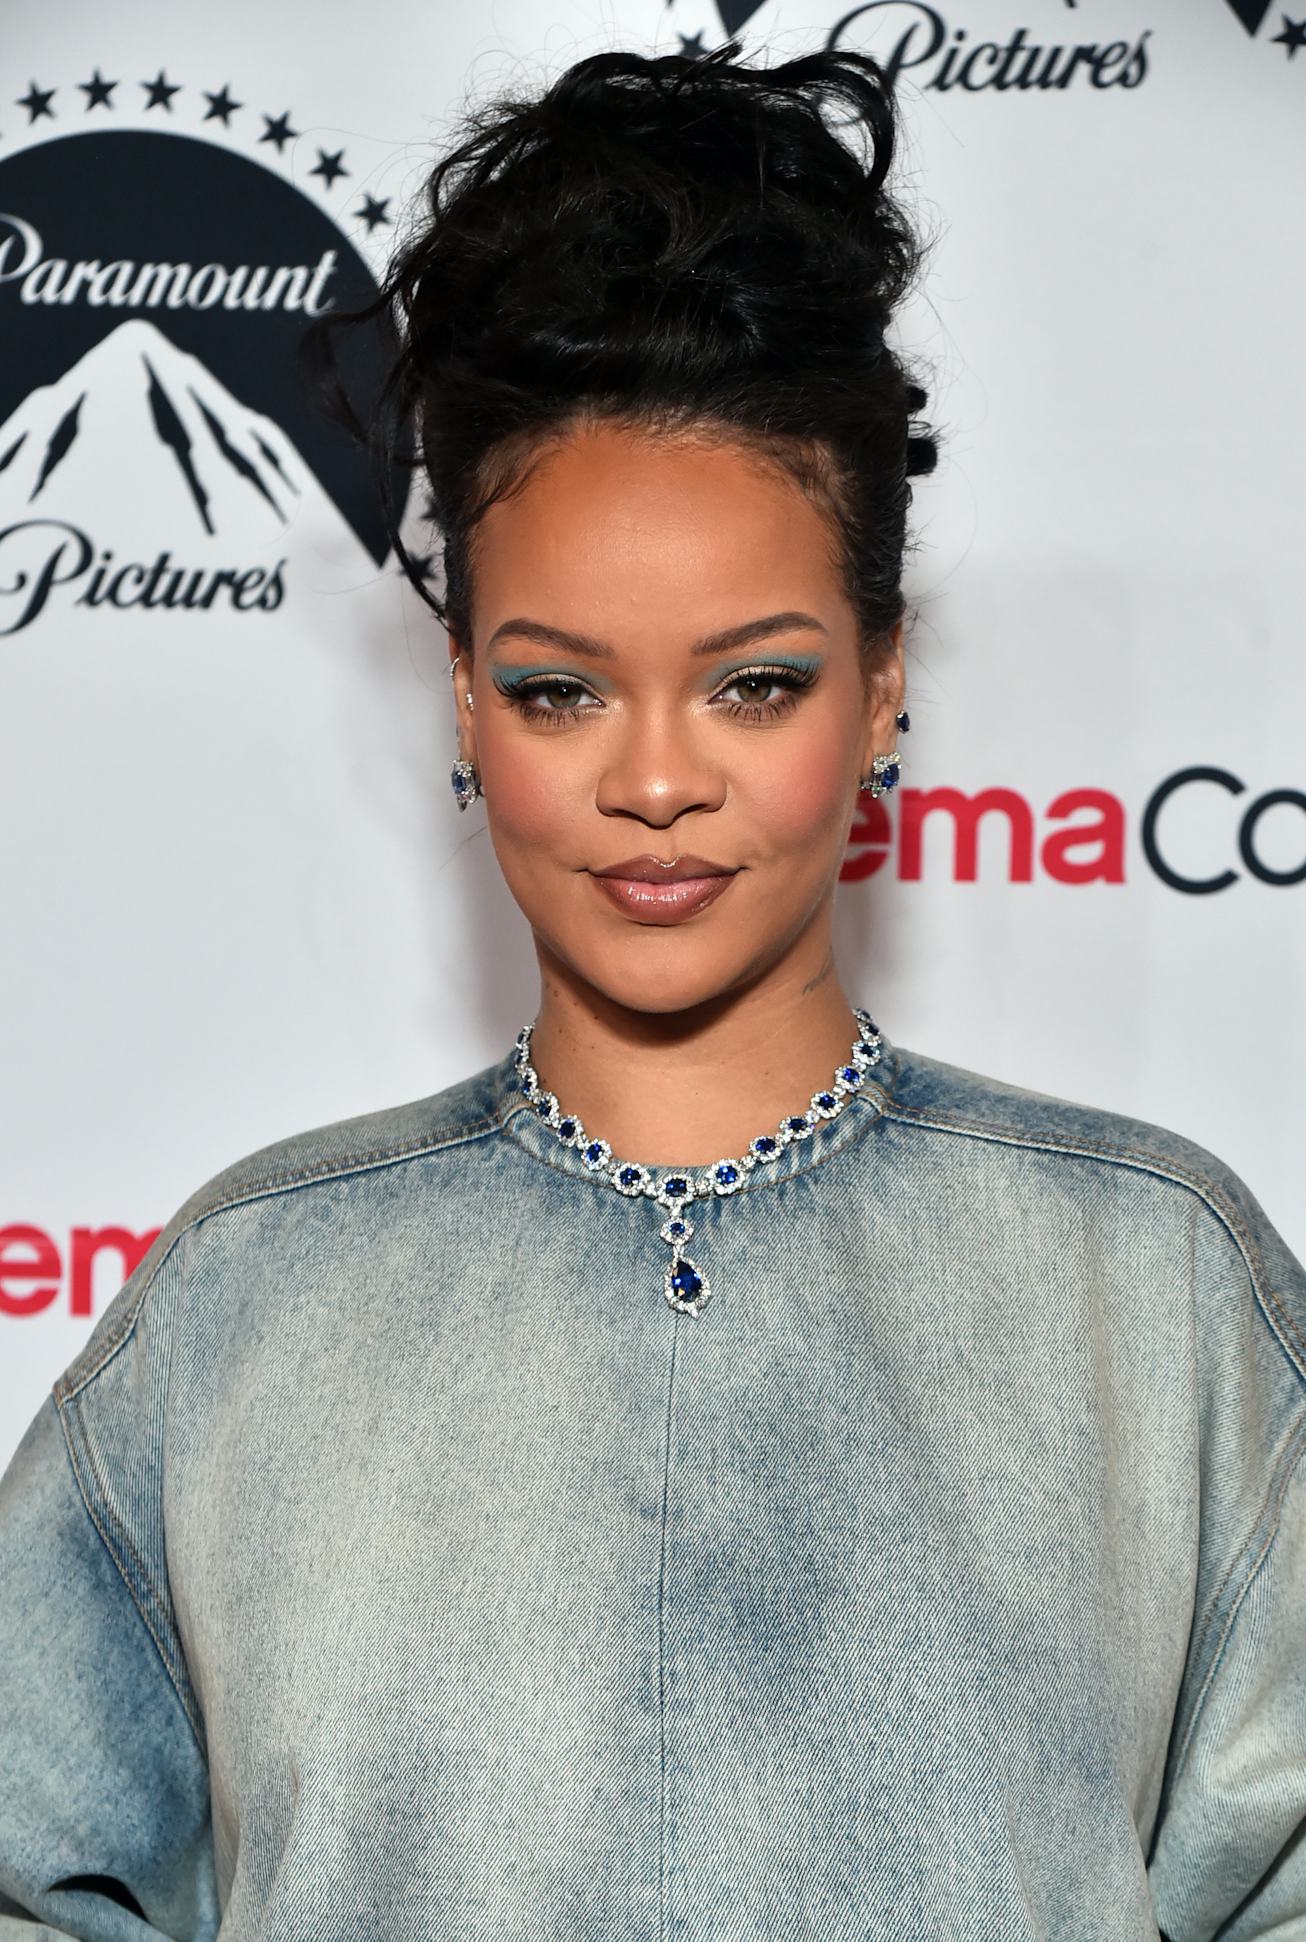 LAS VEGAS, NEVADA - APRIL 27: Rihanna poses for photos, promoting the upcoming film "The Smurfs Movi...